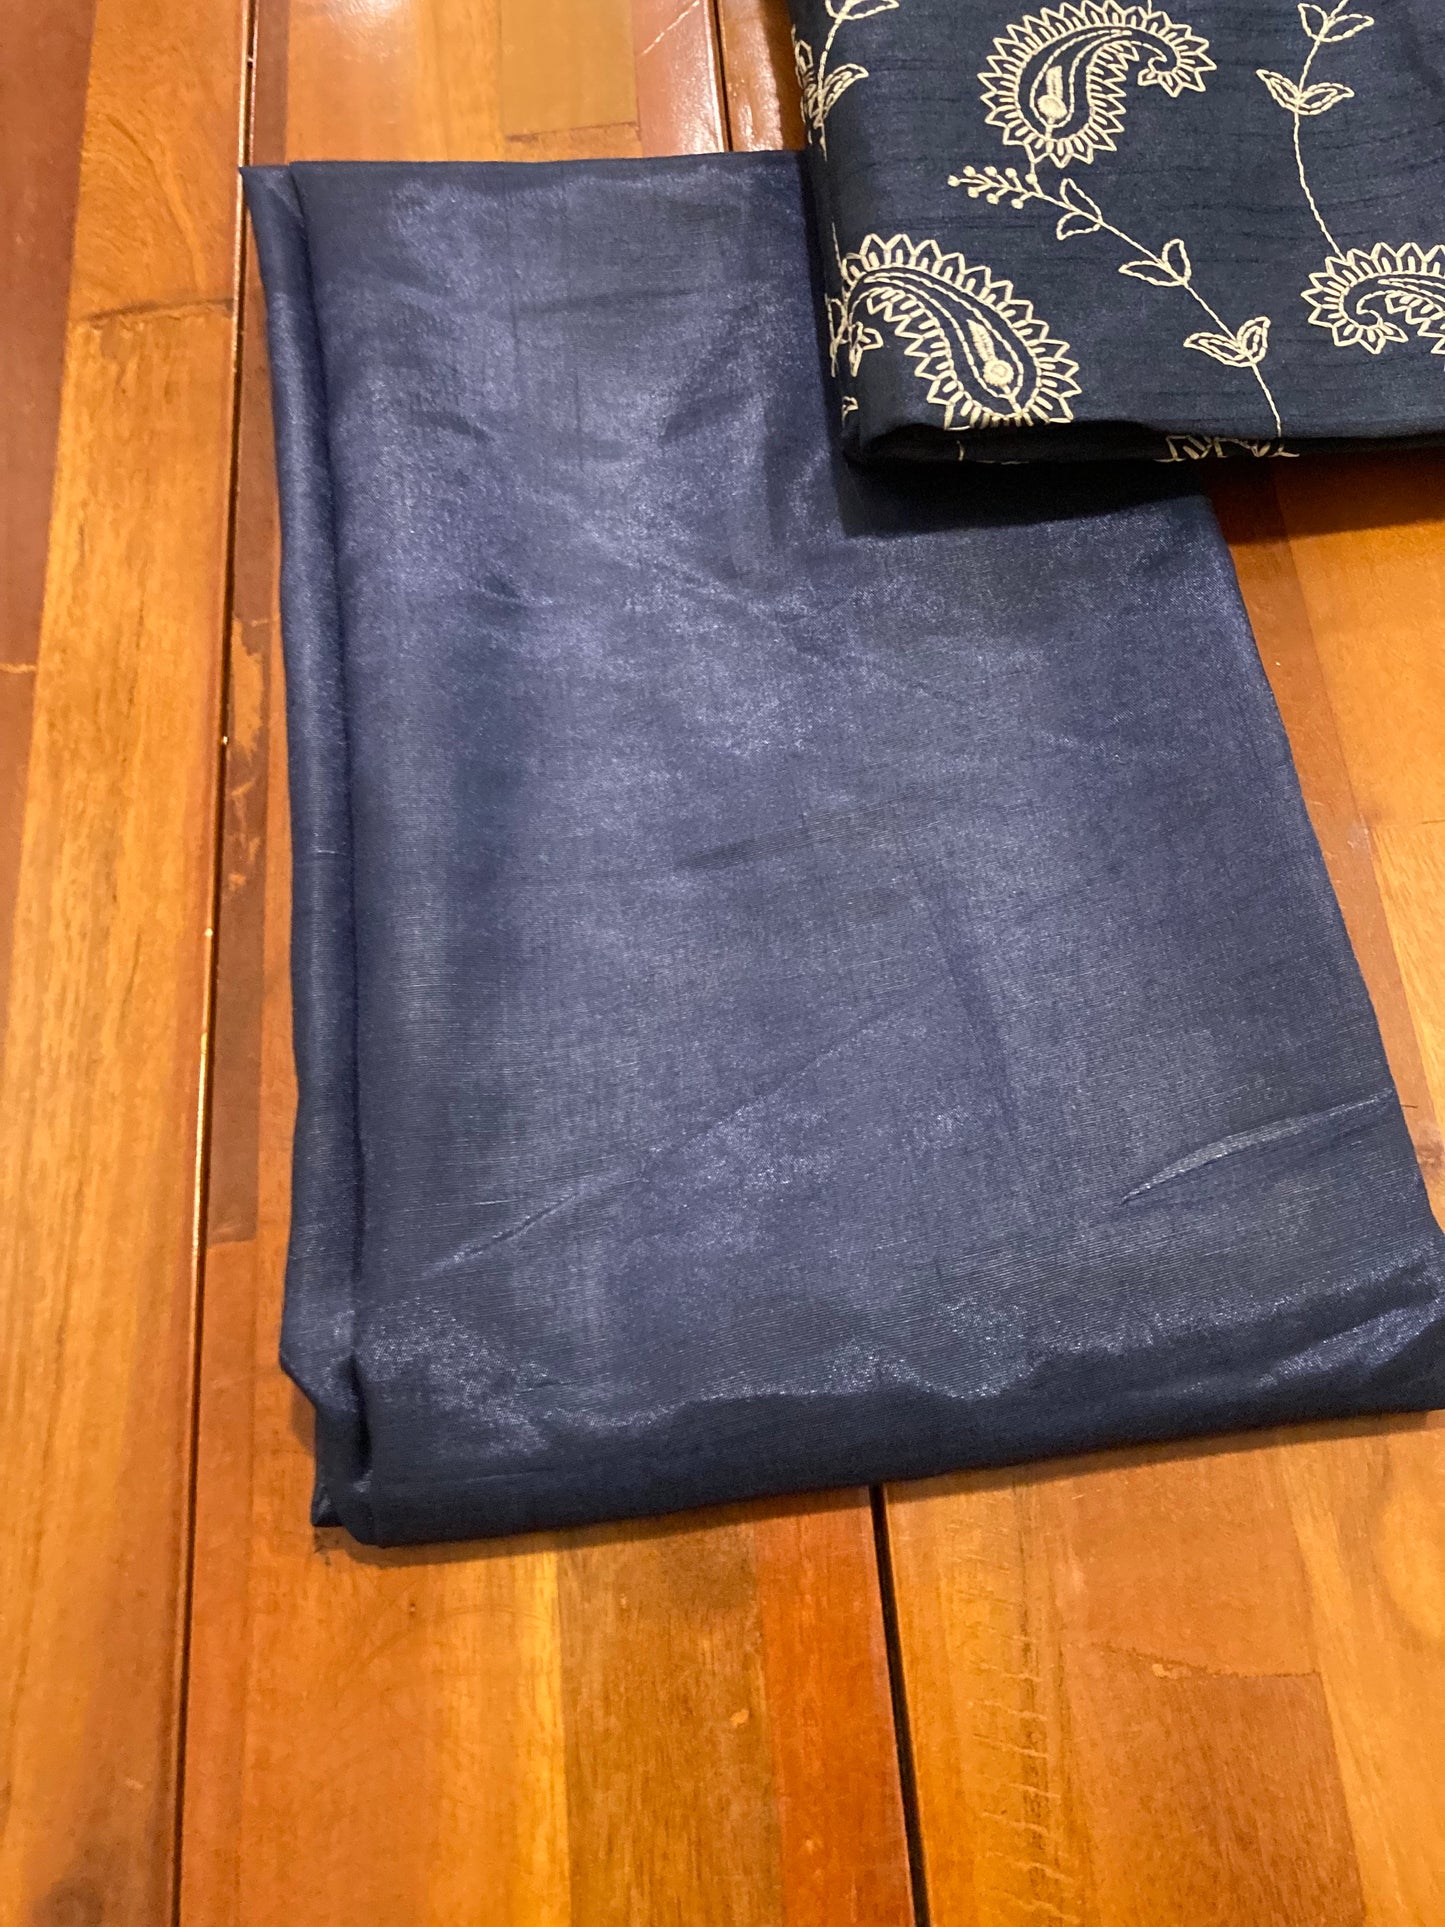 Southloom™ Semi Jute Churidar Salwar Suit Material with Navy Blue Paisley Design Thread work